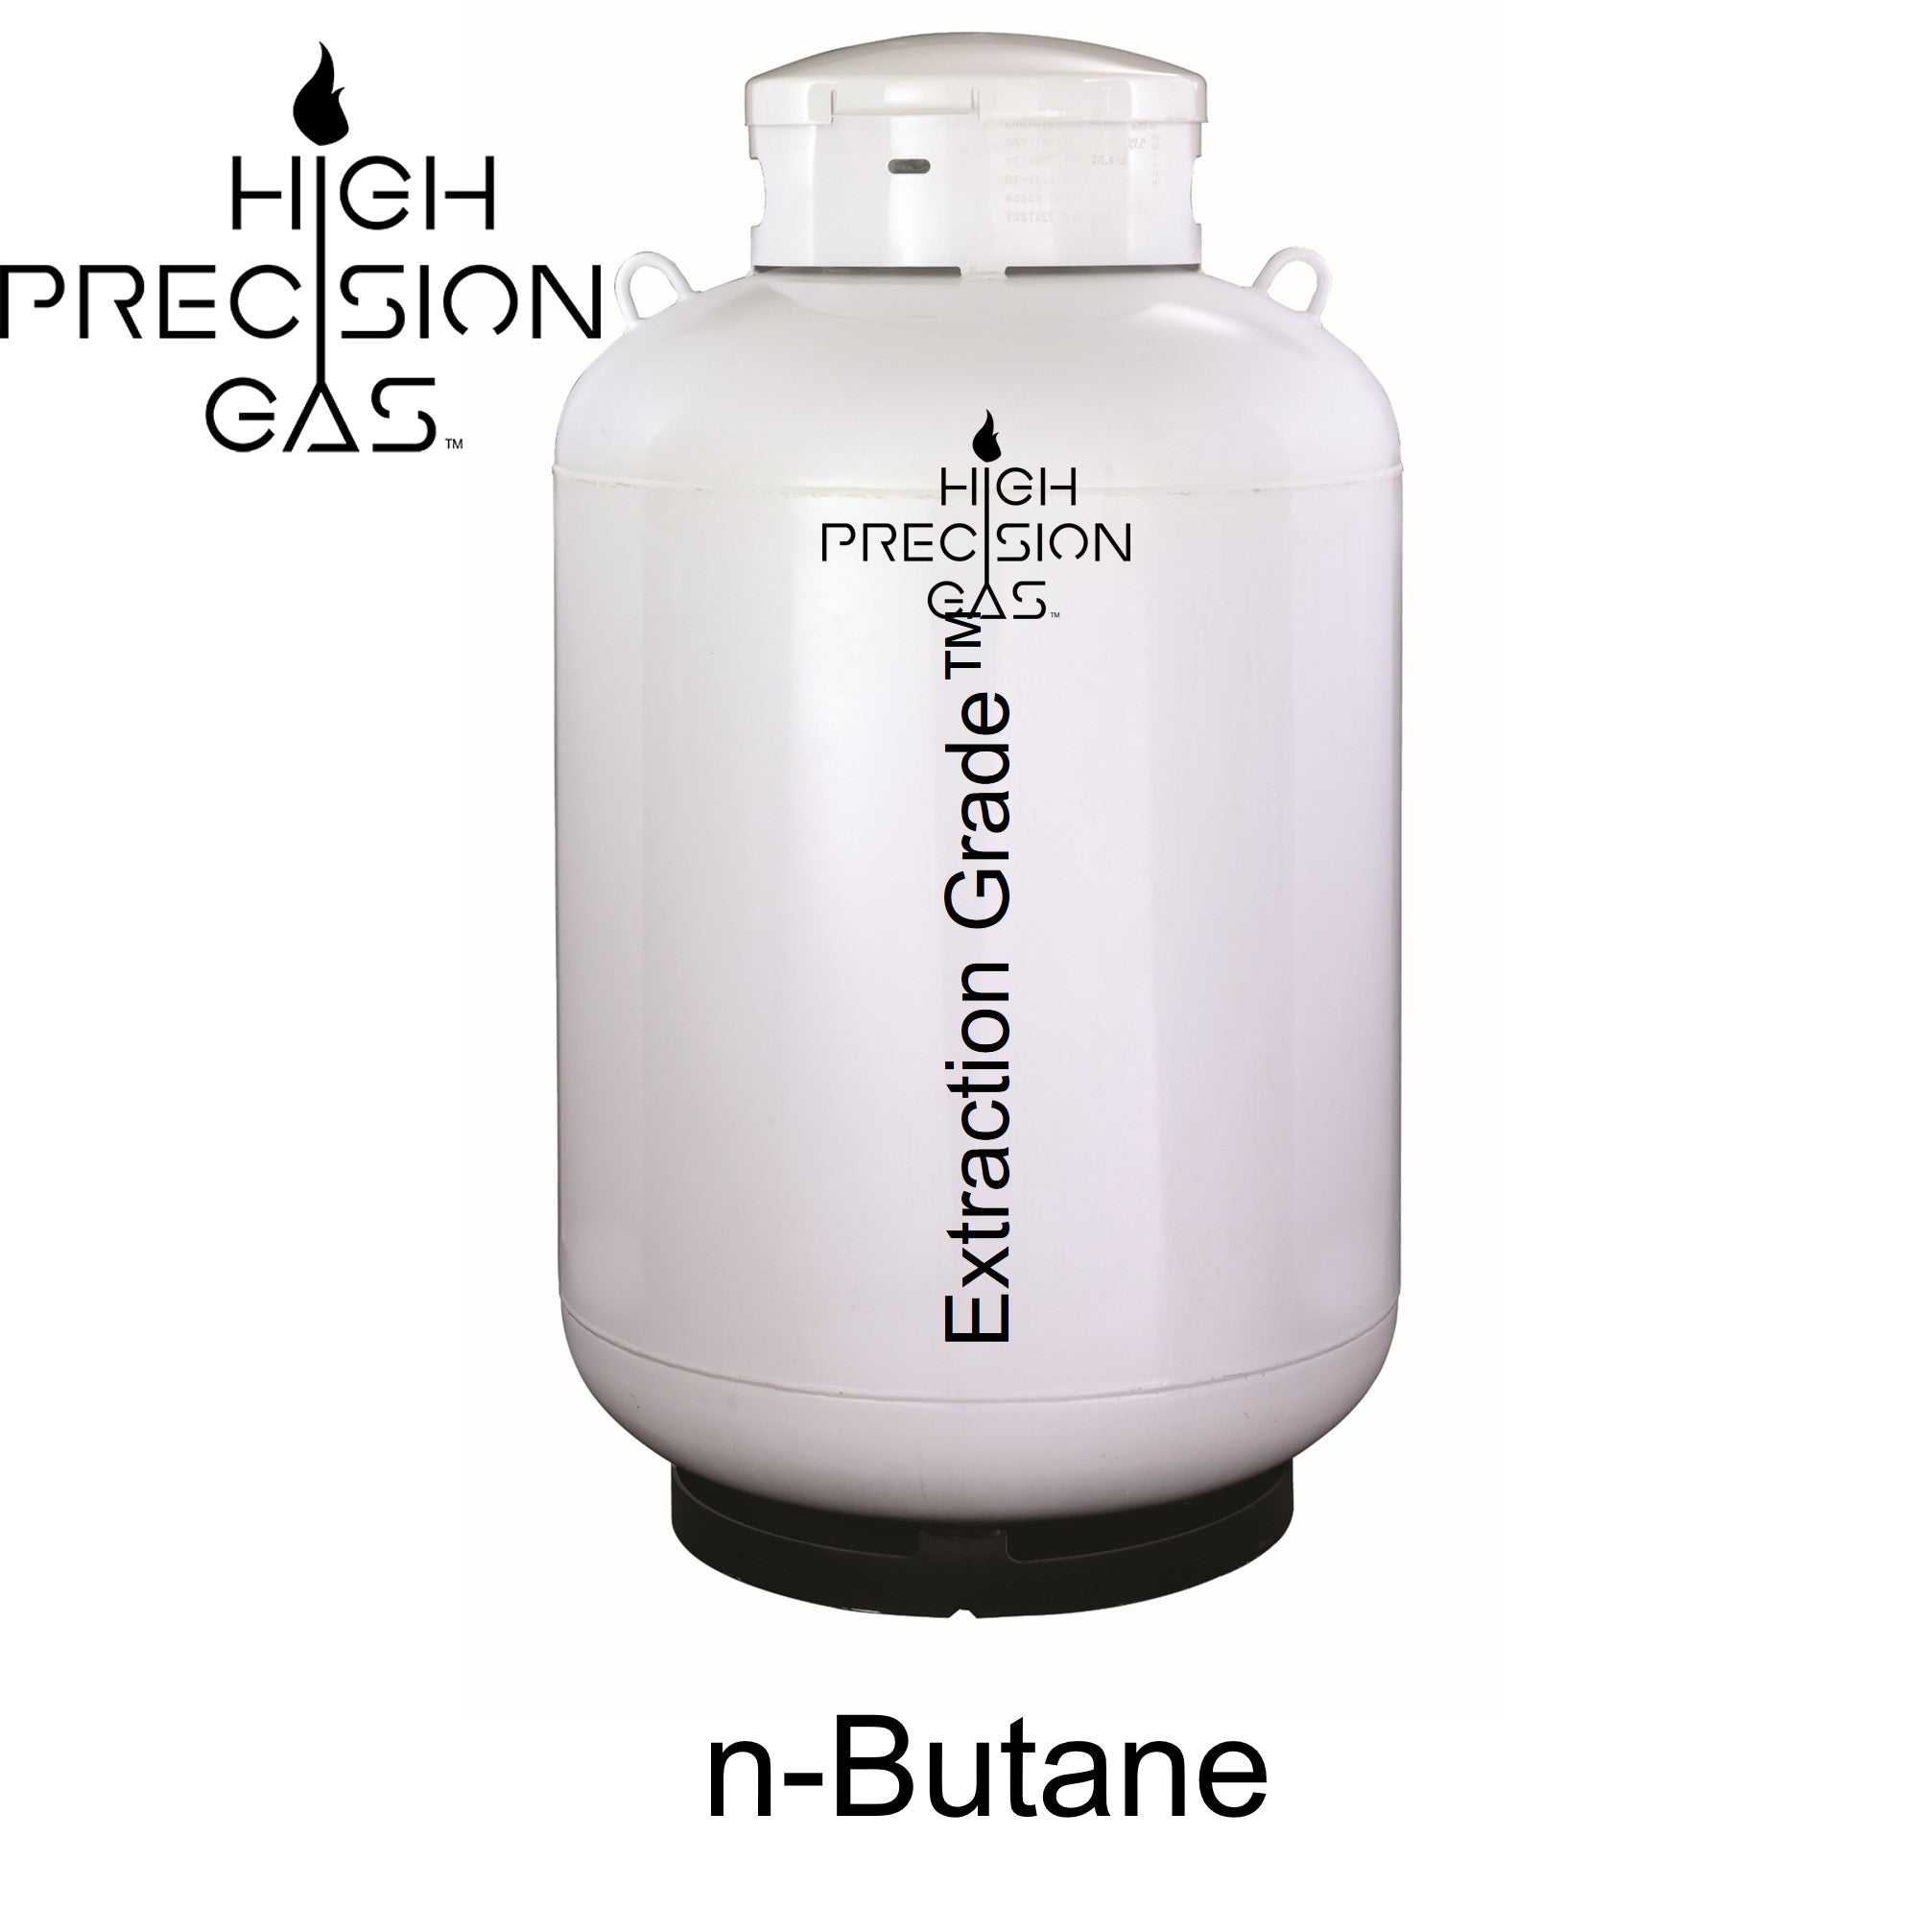 BHO (Butane Honey Oil) Lab - Simulated Training Kit - Inert Products LLC